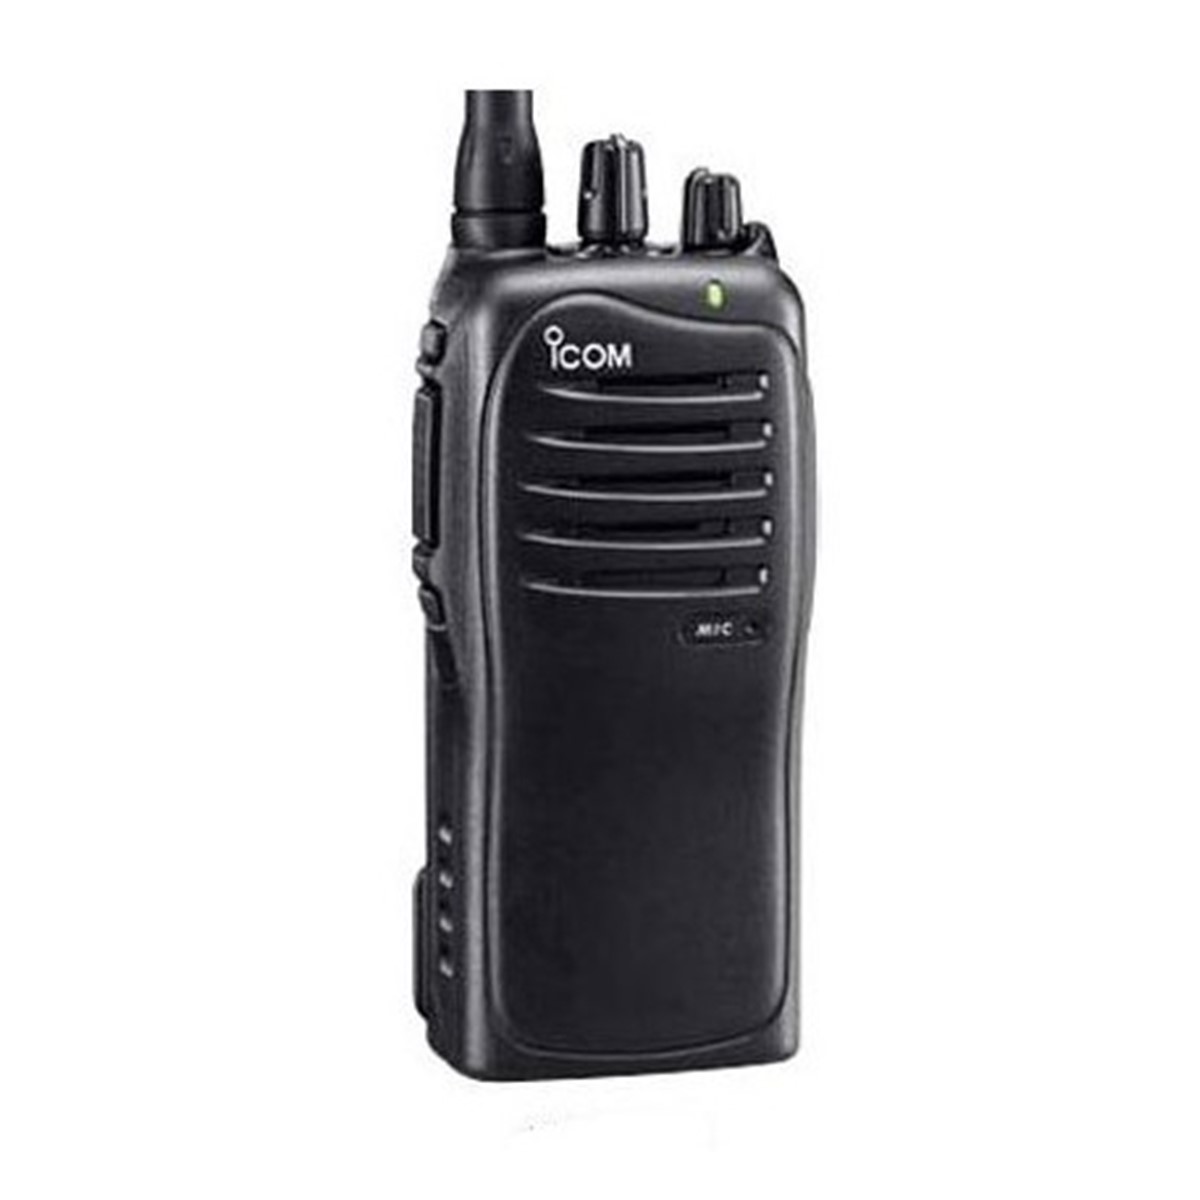 Radio Icom IC-F4013 Analógico UHF 400-470 MHz